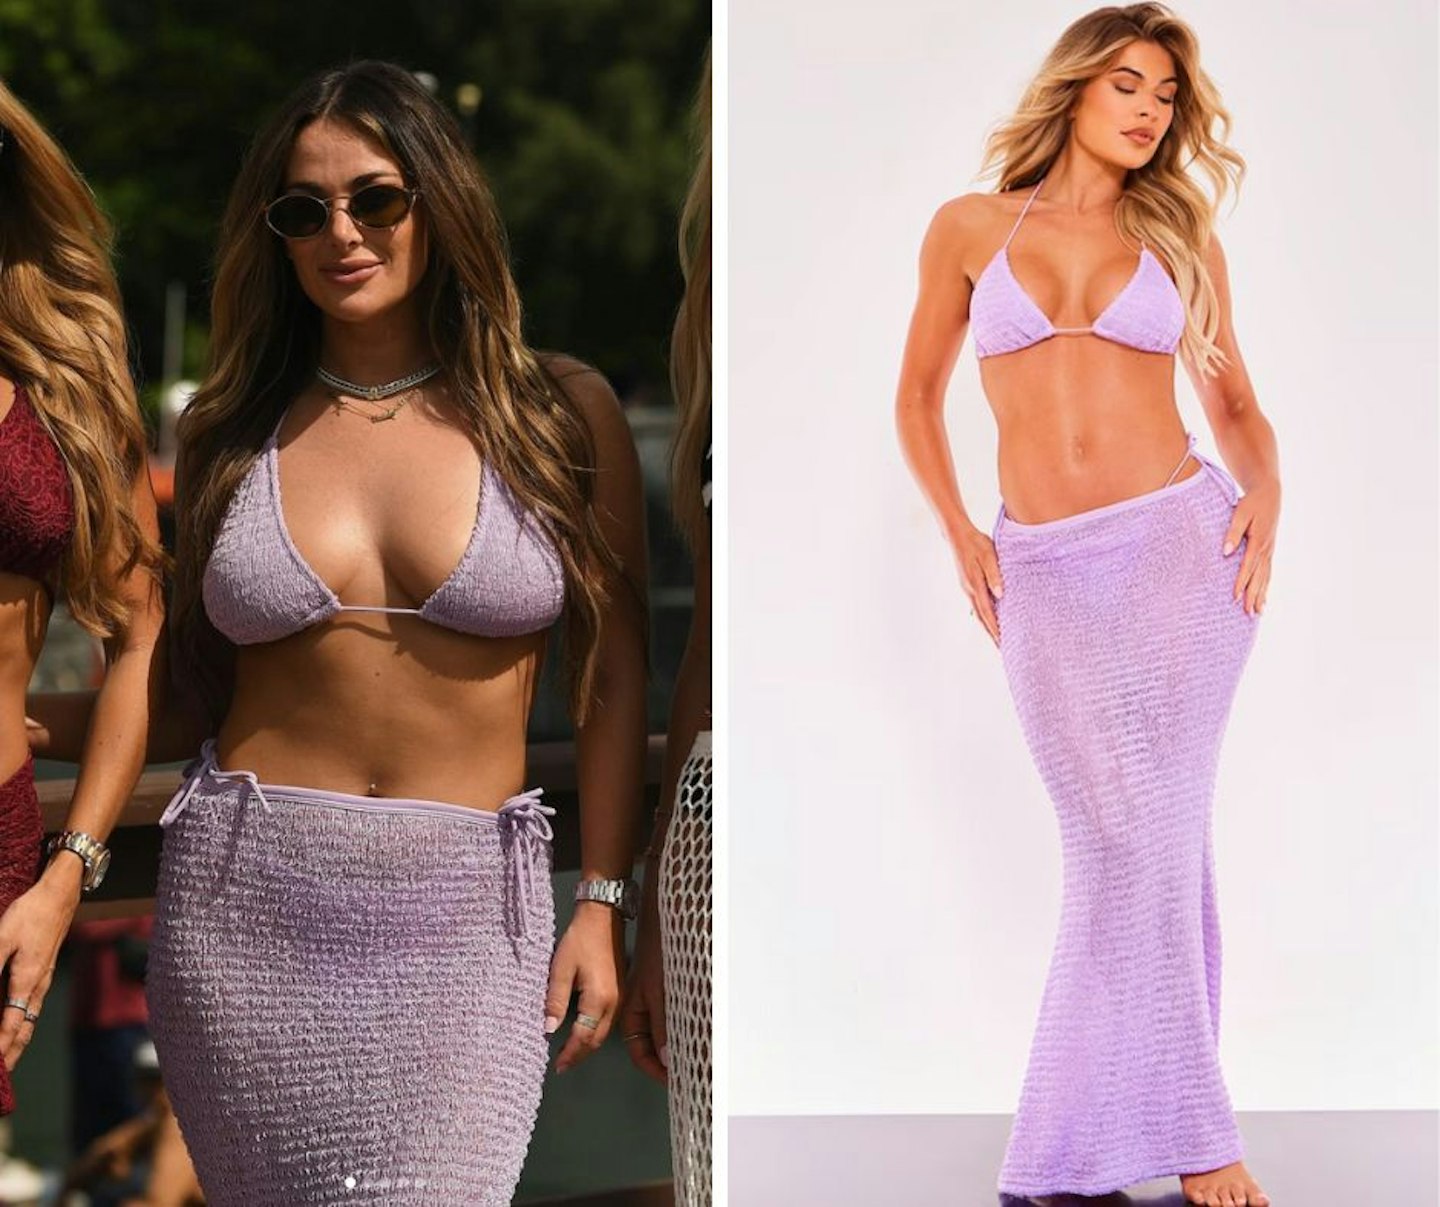 Courtney's Lilac Bikini and Skirt